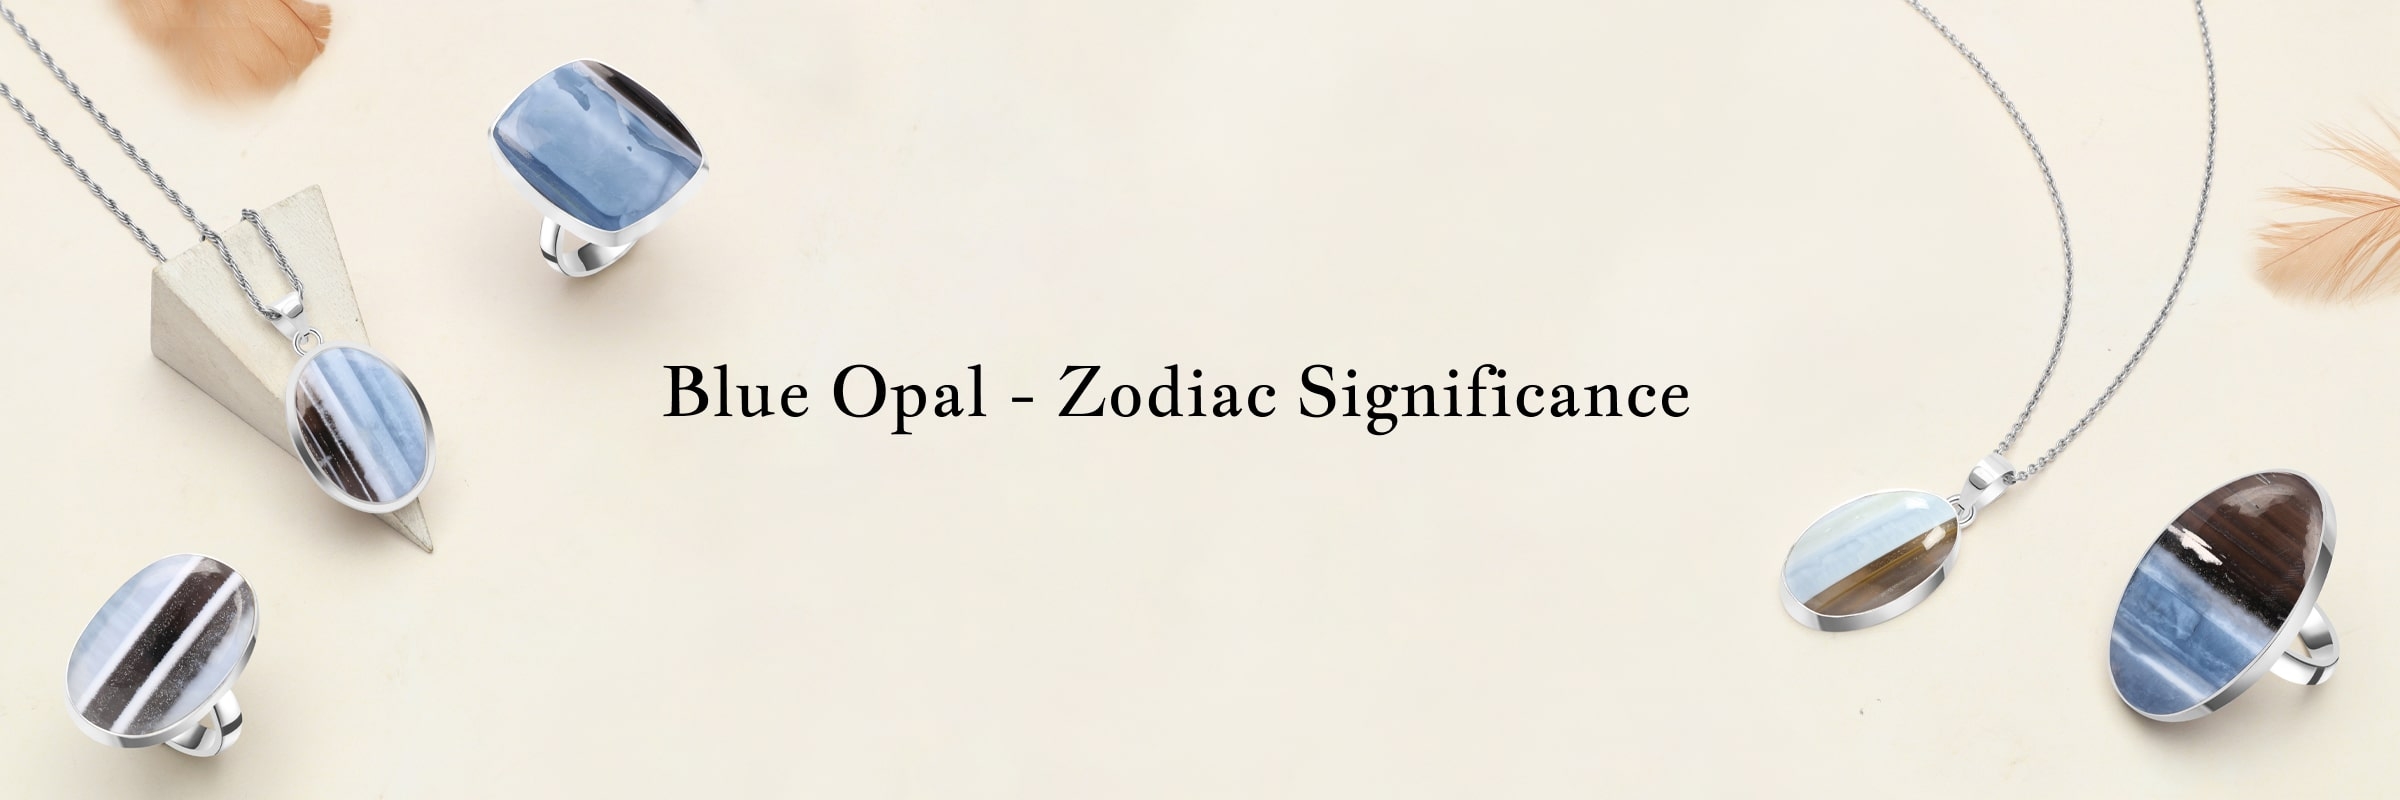 Zodiac sign of blue opal